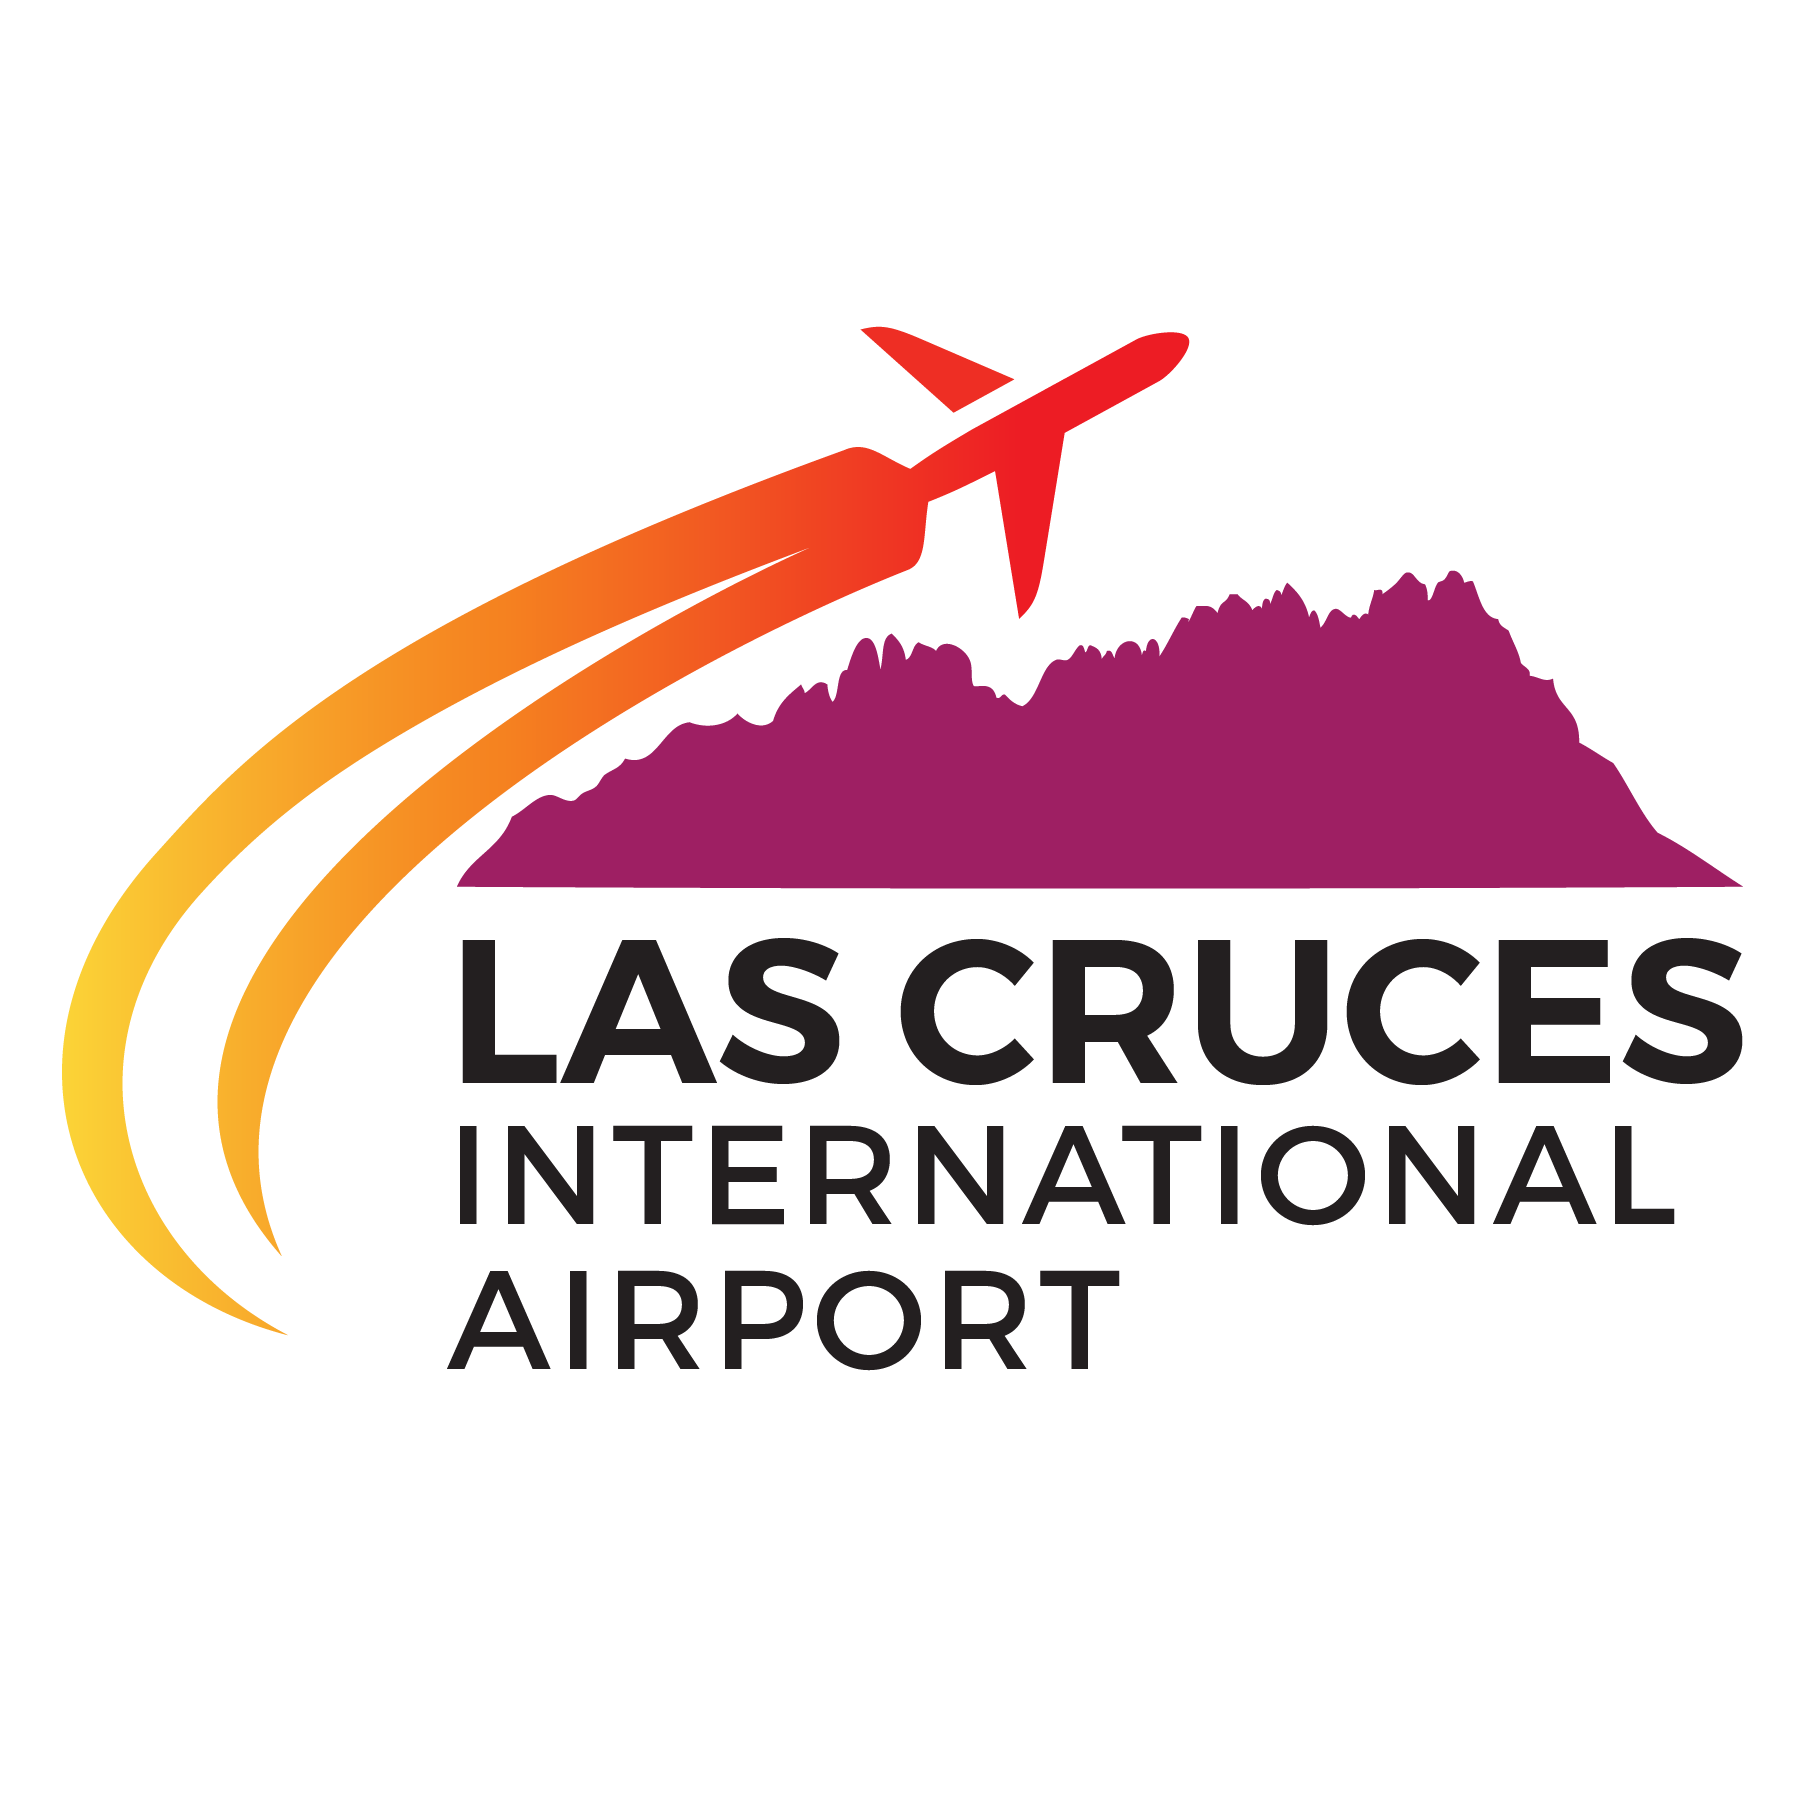 Las Cruces International Airport Logo